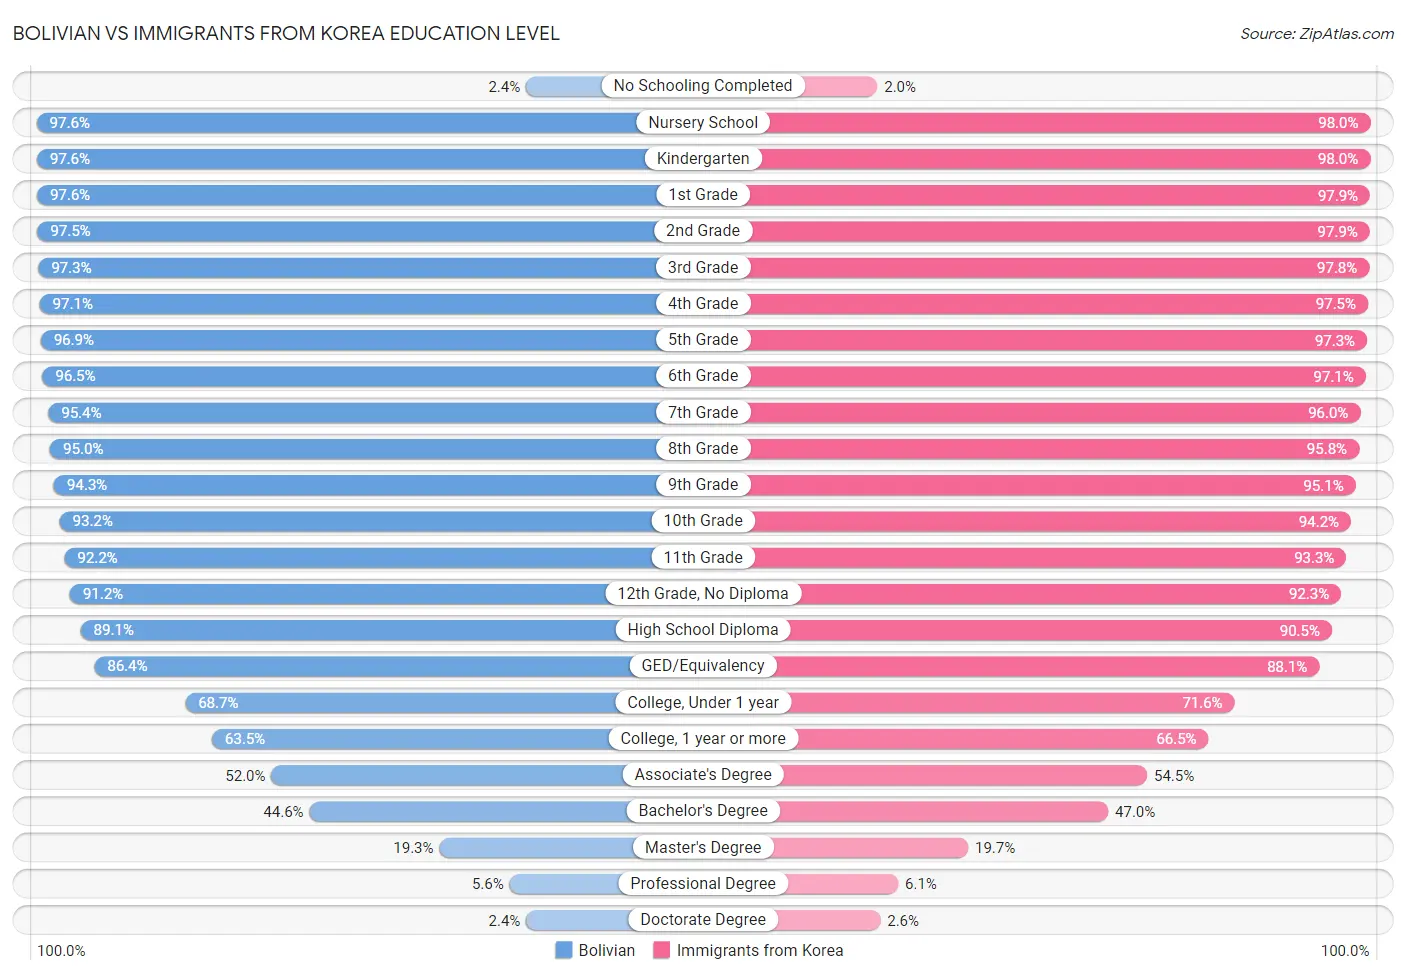 Bolivian vs Immigrants from Korea Education Level